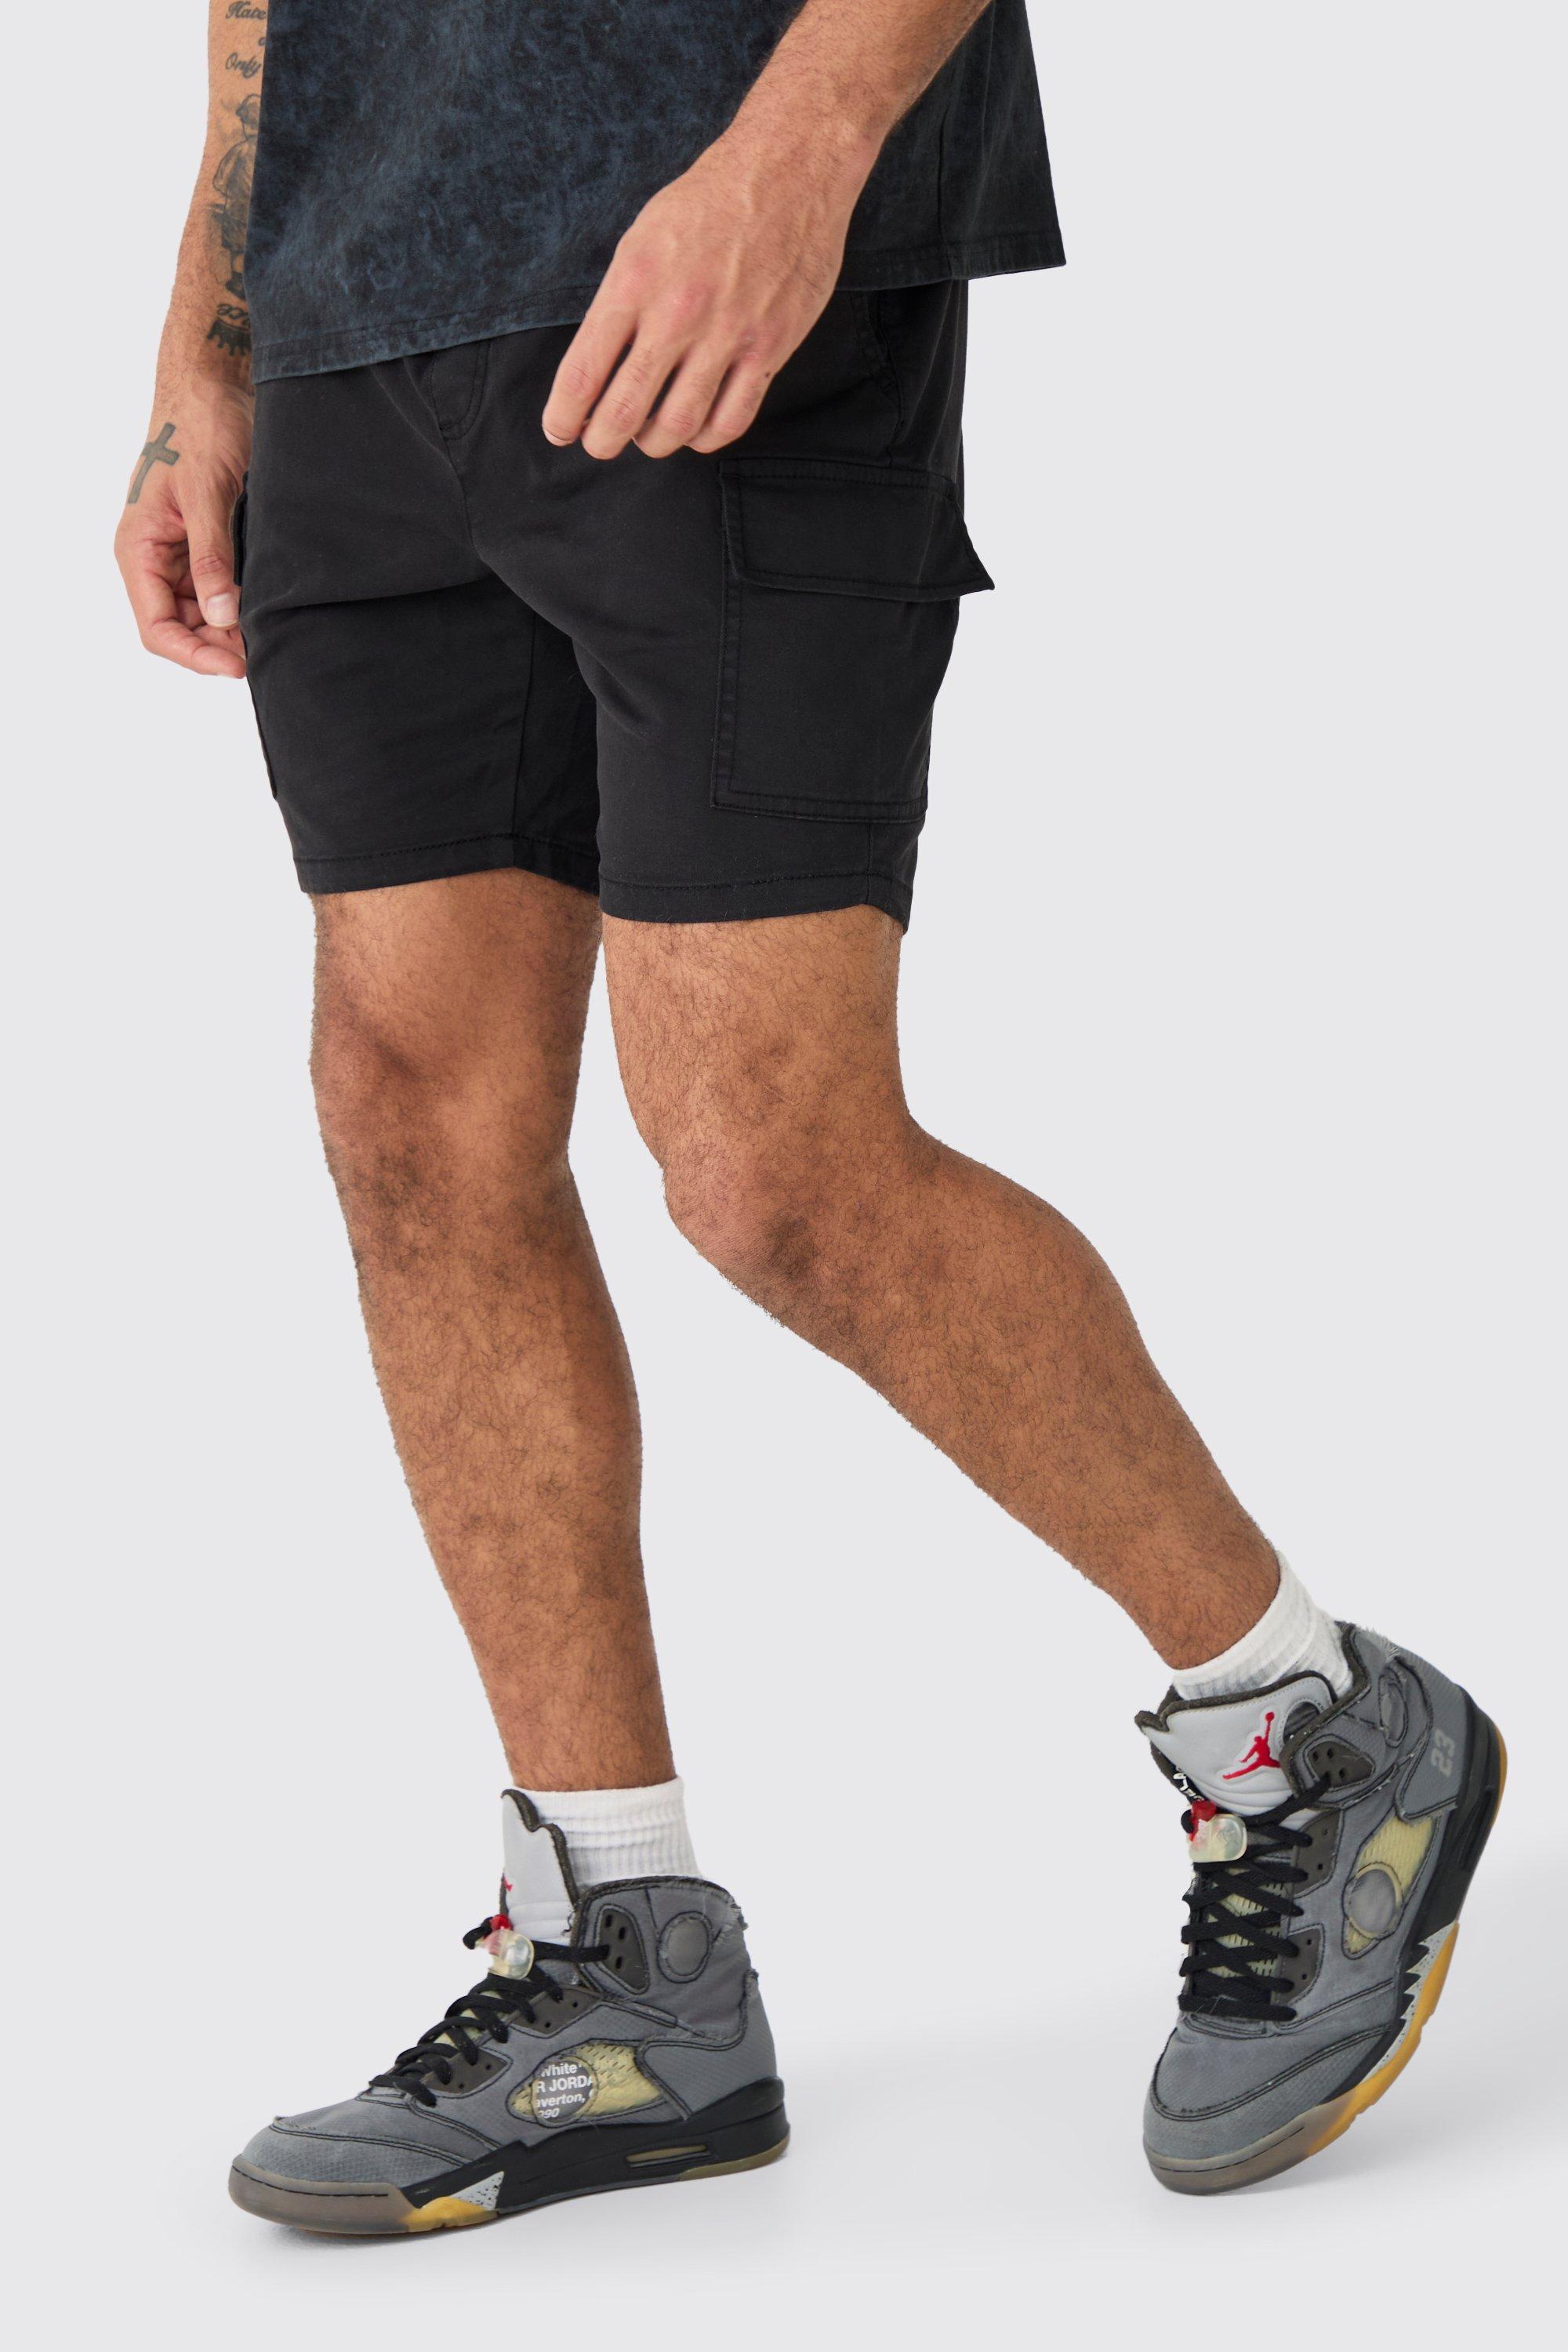 Image of Skinny Fit Cargo Shorts in Black, Nero